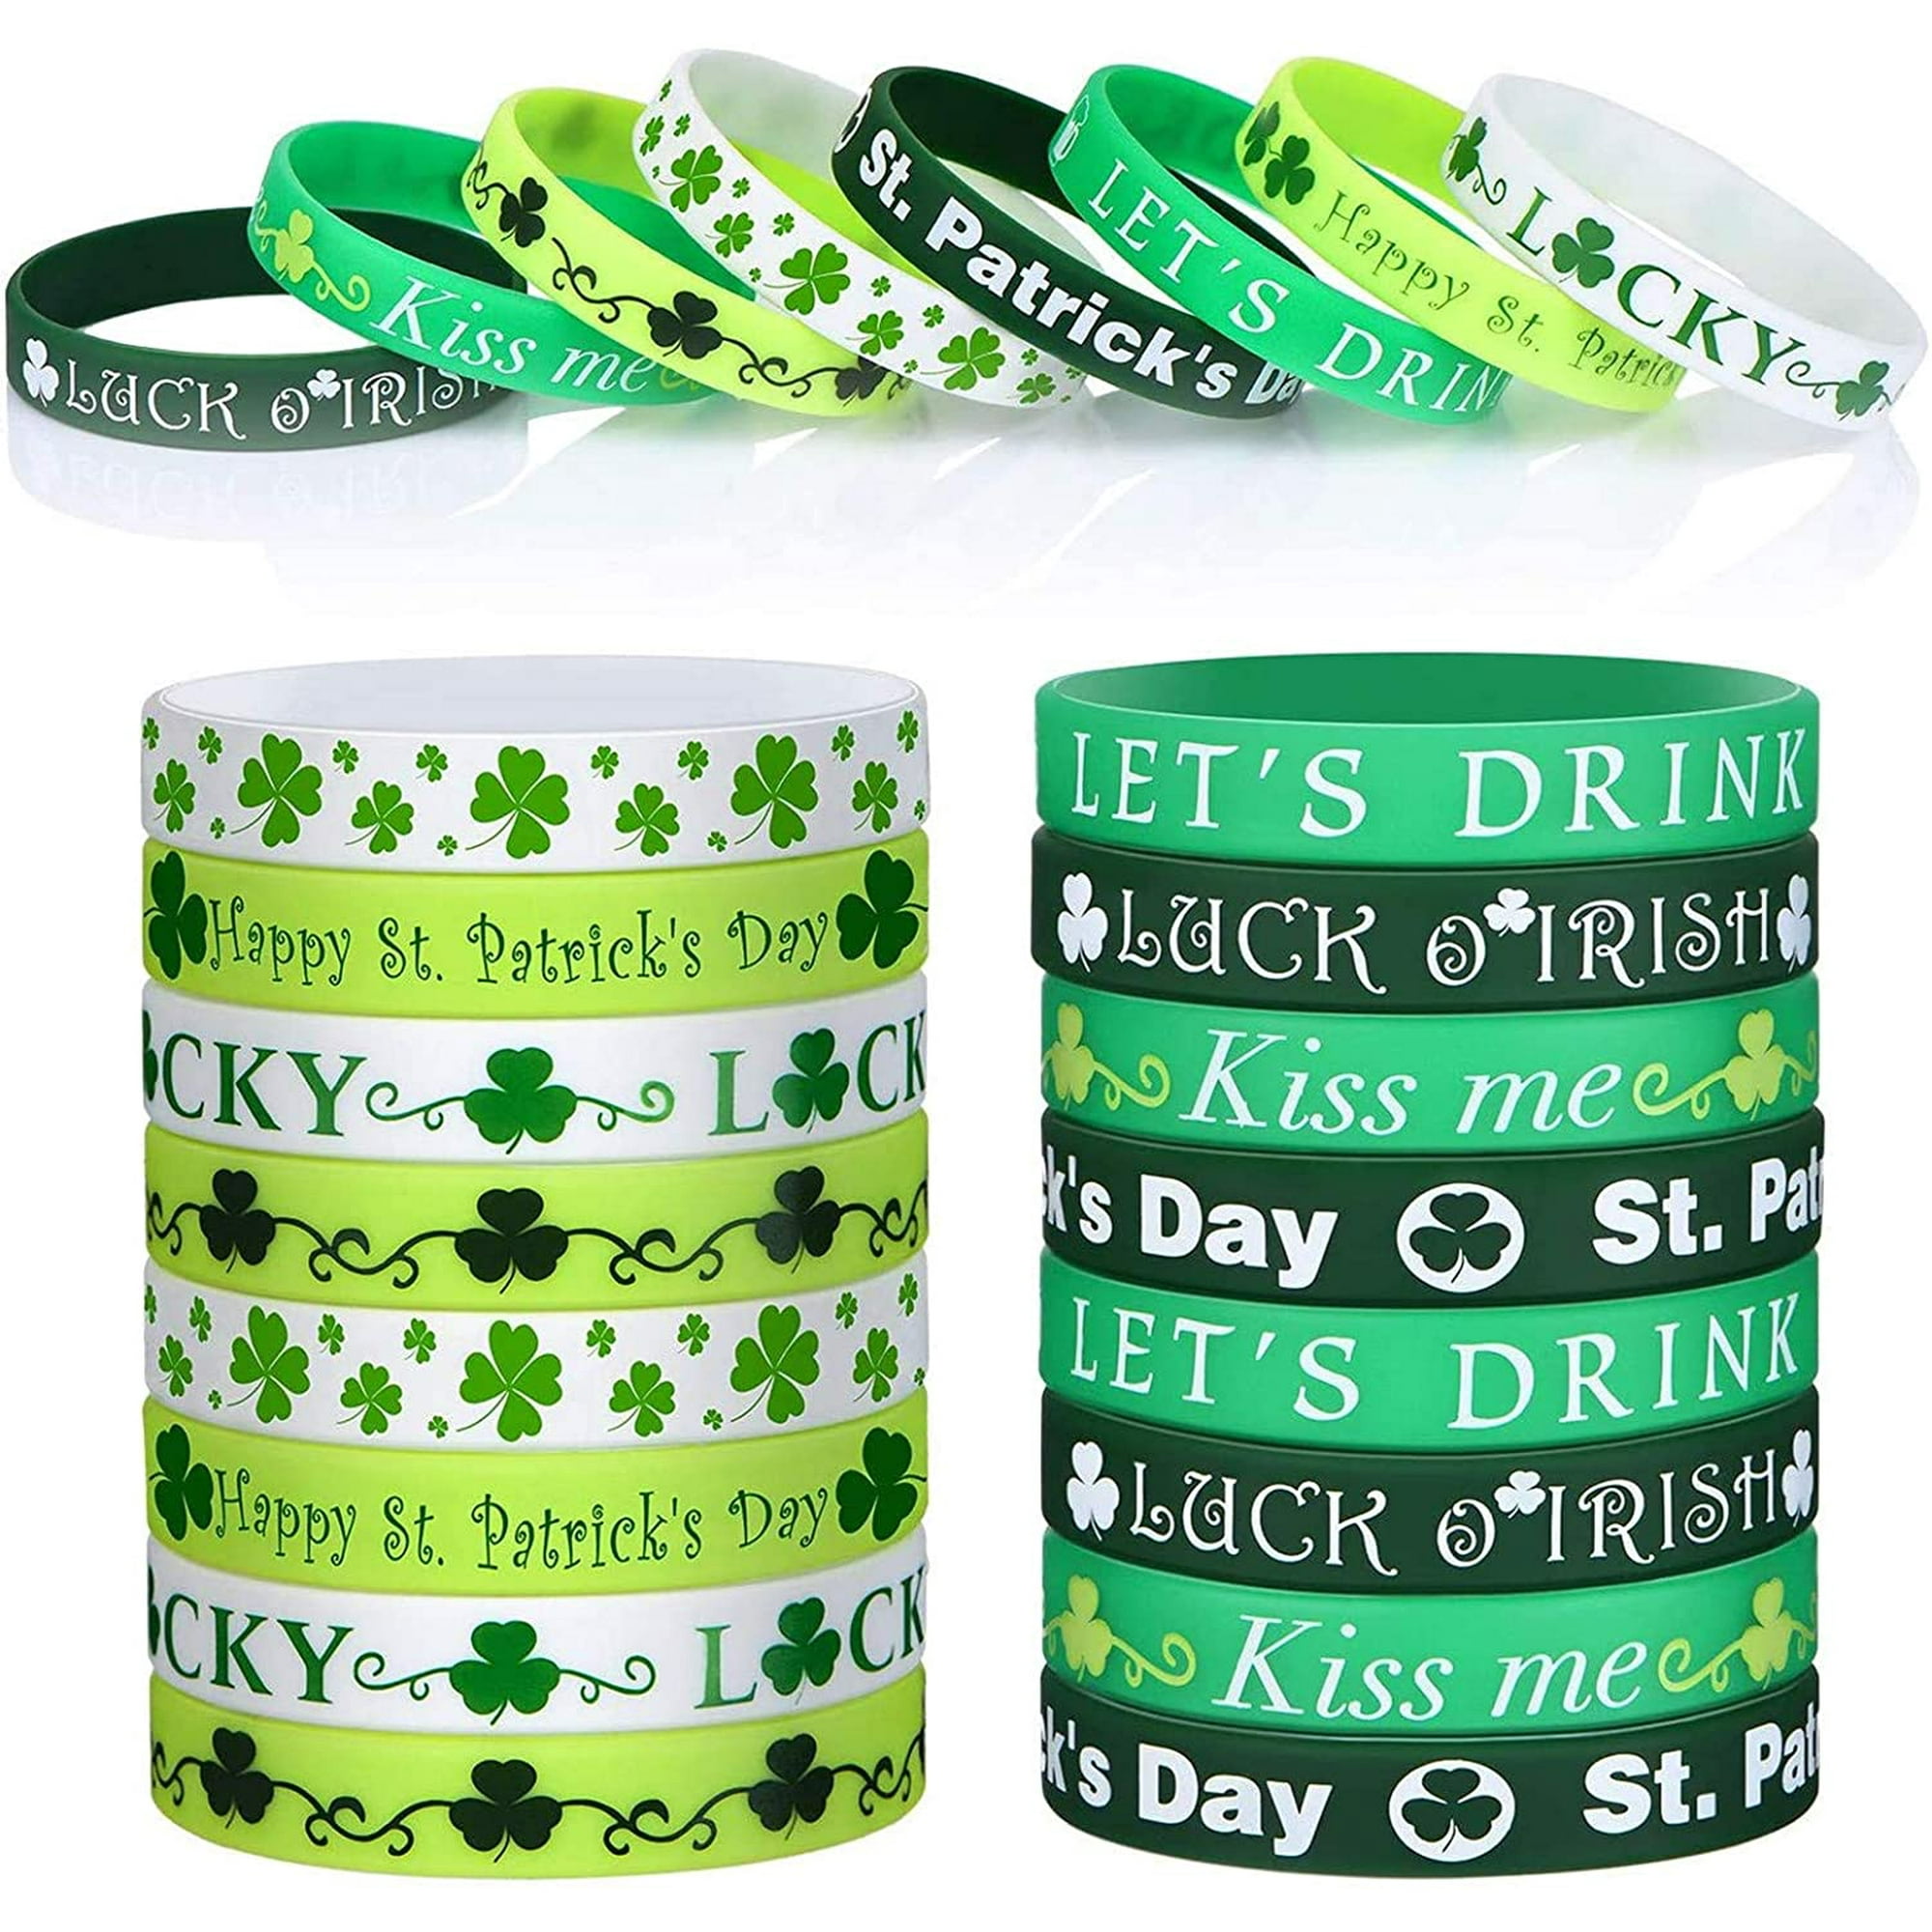 48 8 Rubber Irish Saying Bracelets ~ Saint Patricks Day Party Favor ~ 